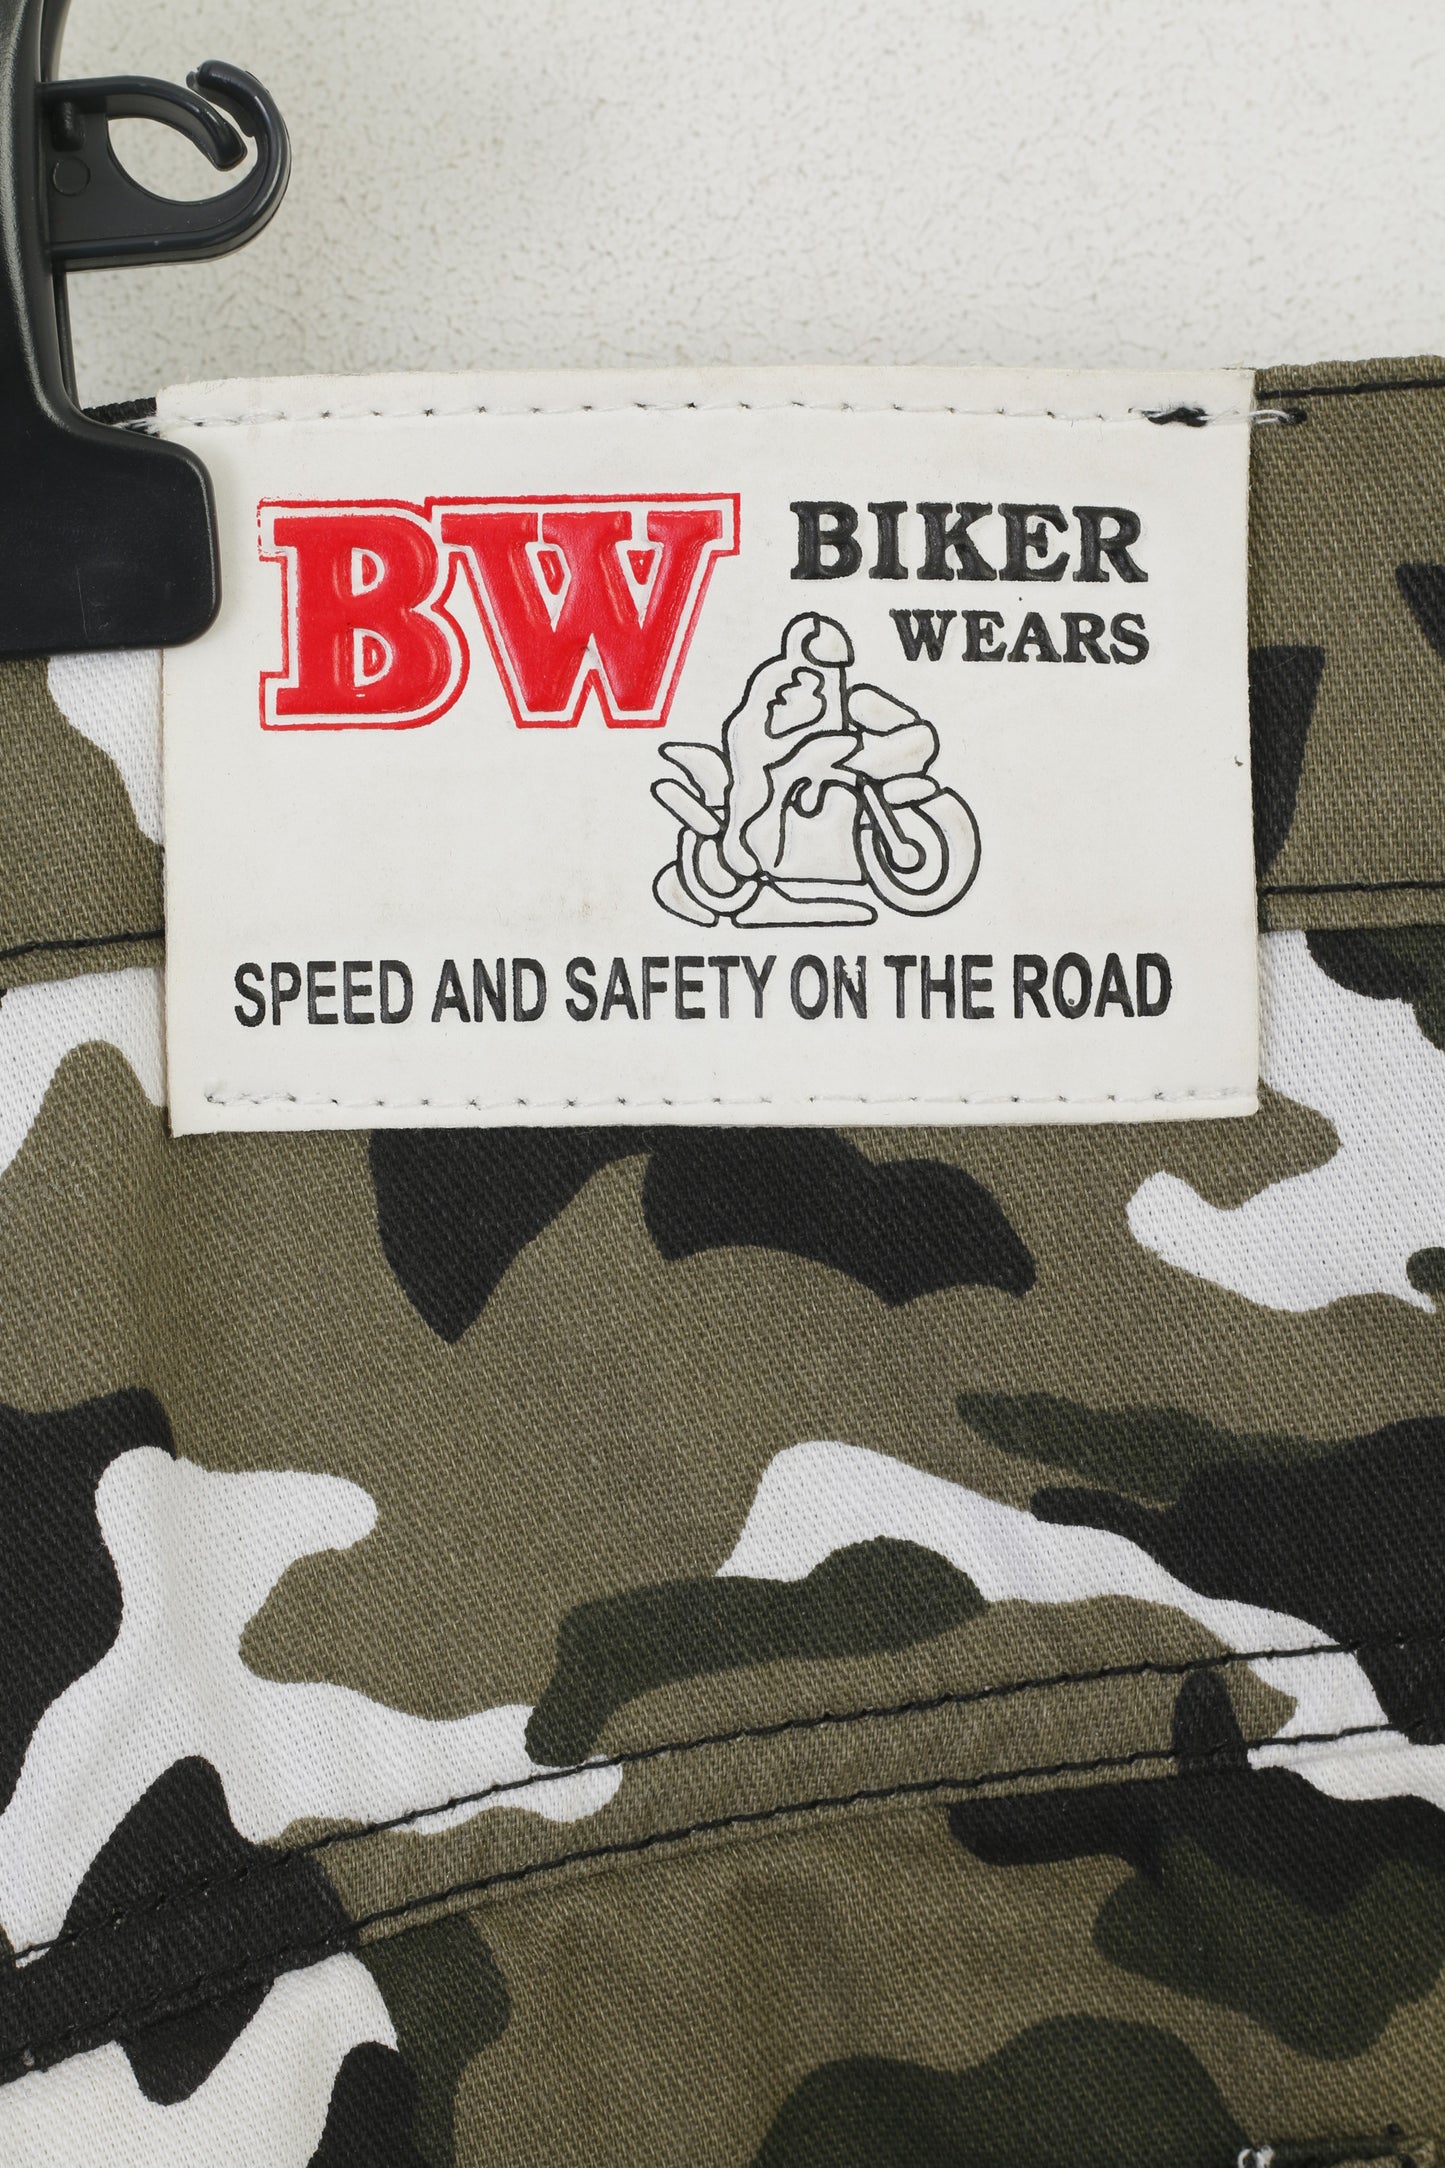 Biker Wears Hommes 44 60 Pantalon Vert Combat Camouflage Vitesse Pantalon en Coton